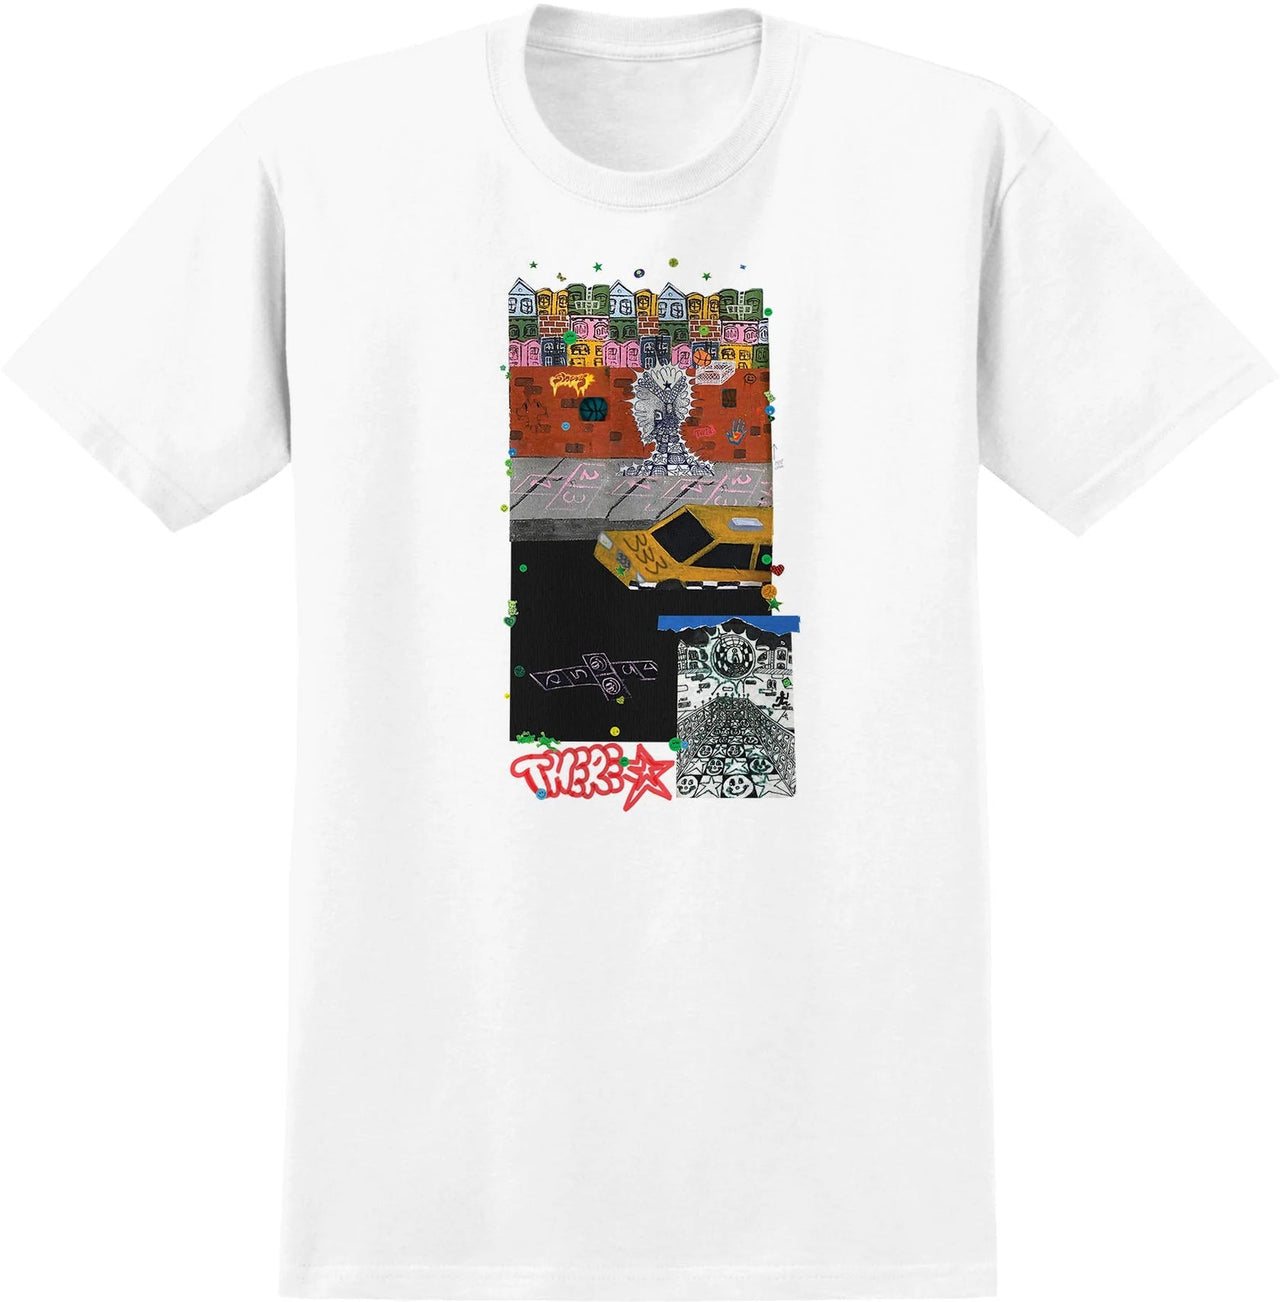 There Shag City T-Shirt - White image 1